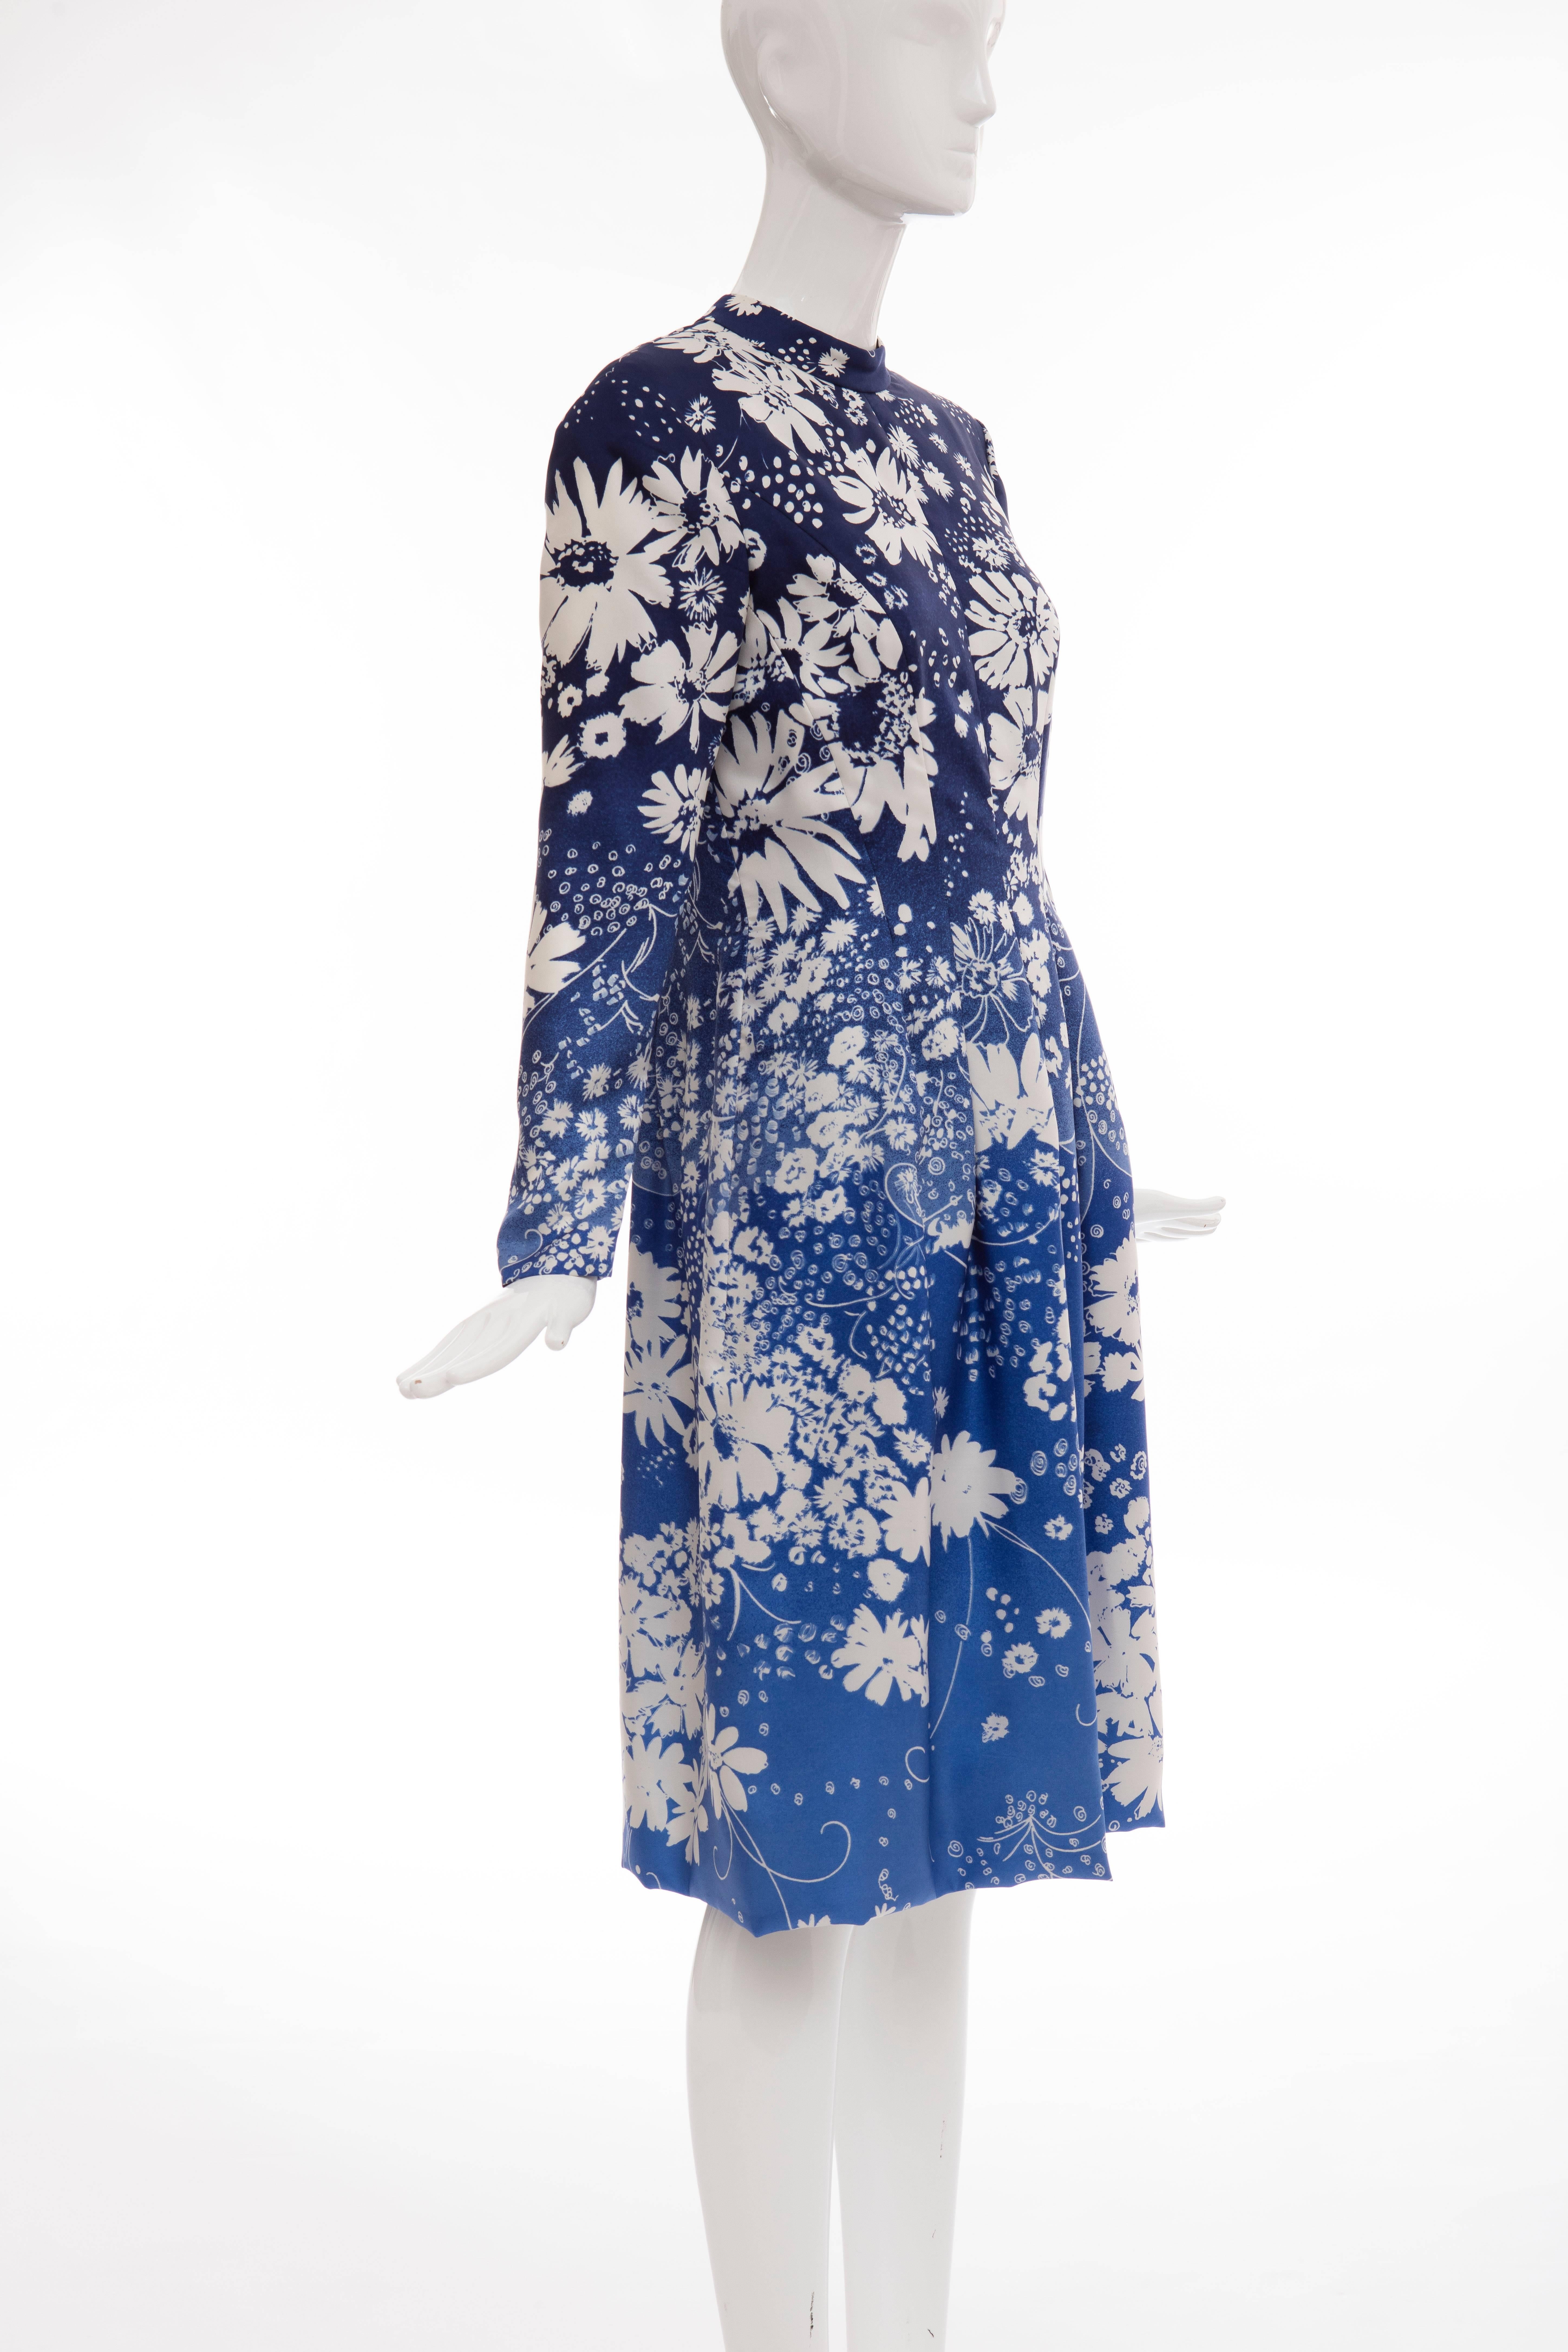 Pauline Trigere Navy Blue Ombre Silk Floral Long Sleeve Dress, Circa 1980's 1